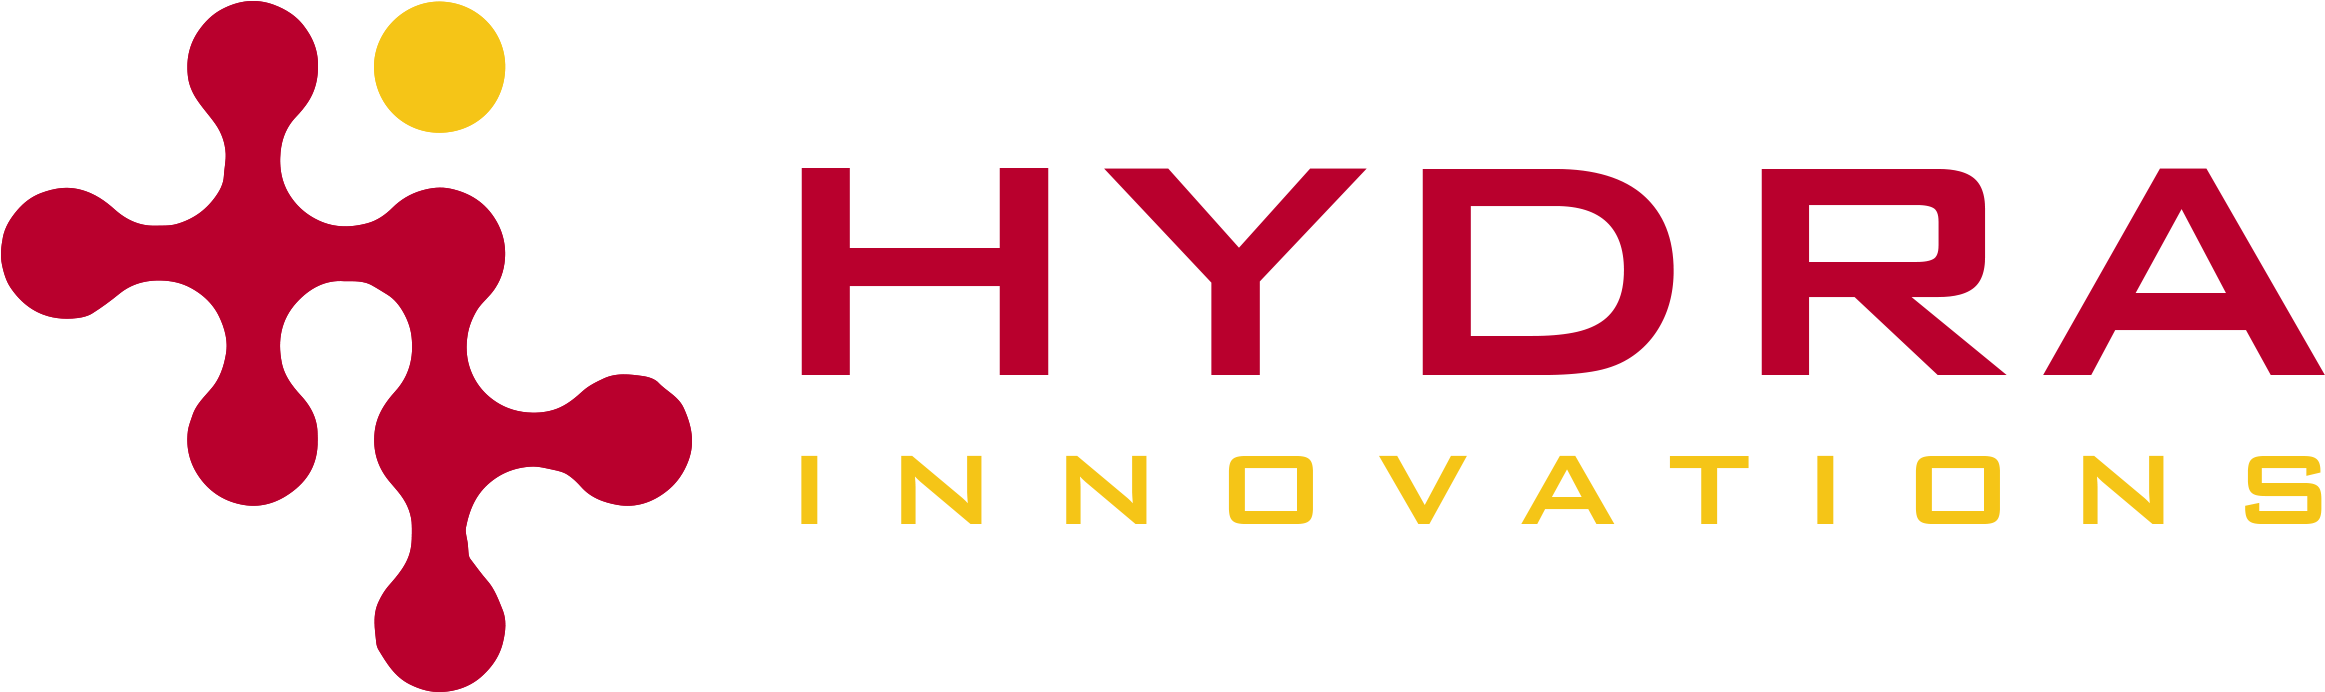 Hydra Logo PNG صورة عالية الجودة